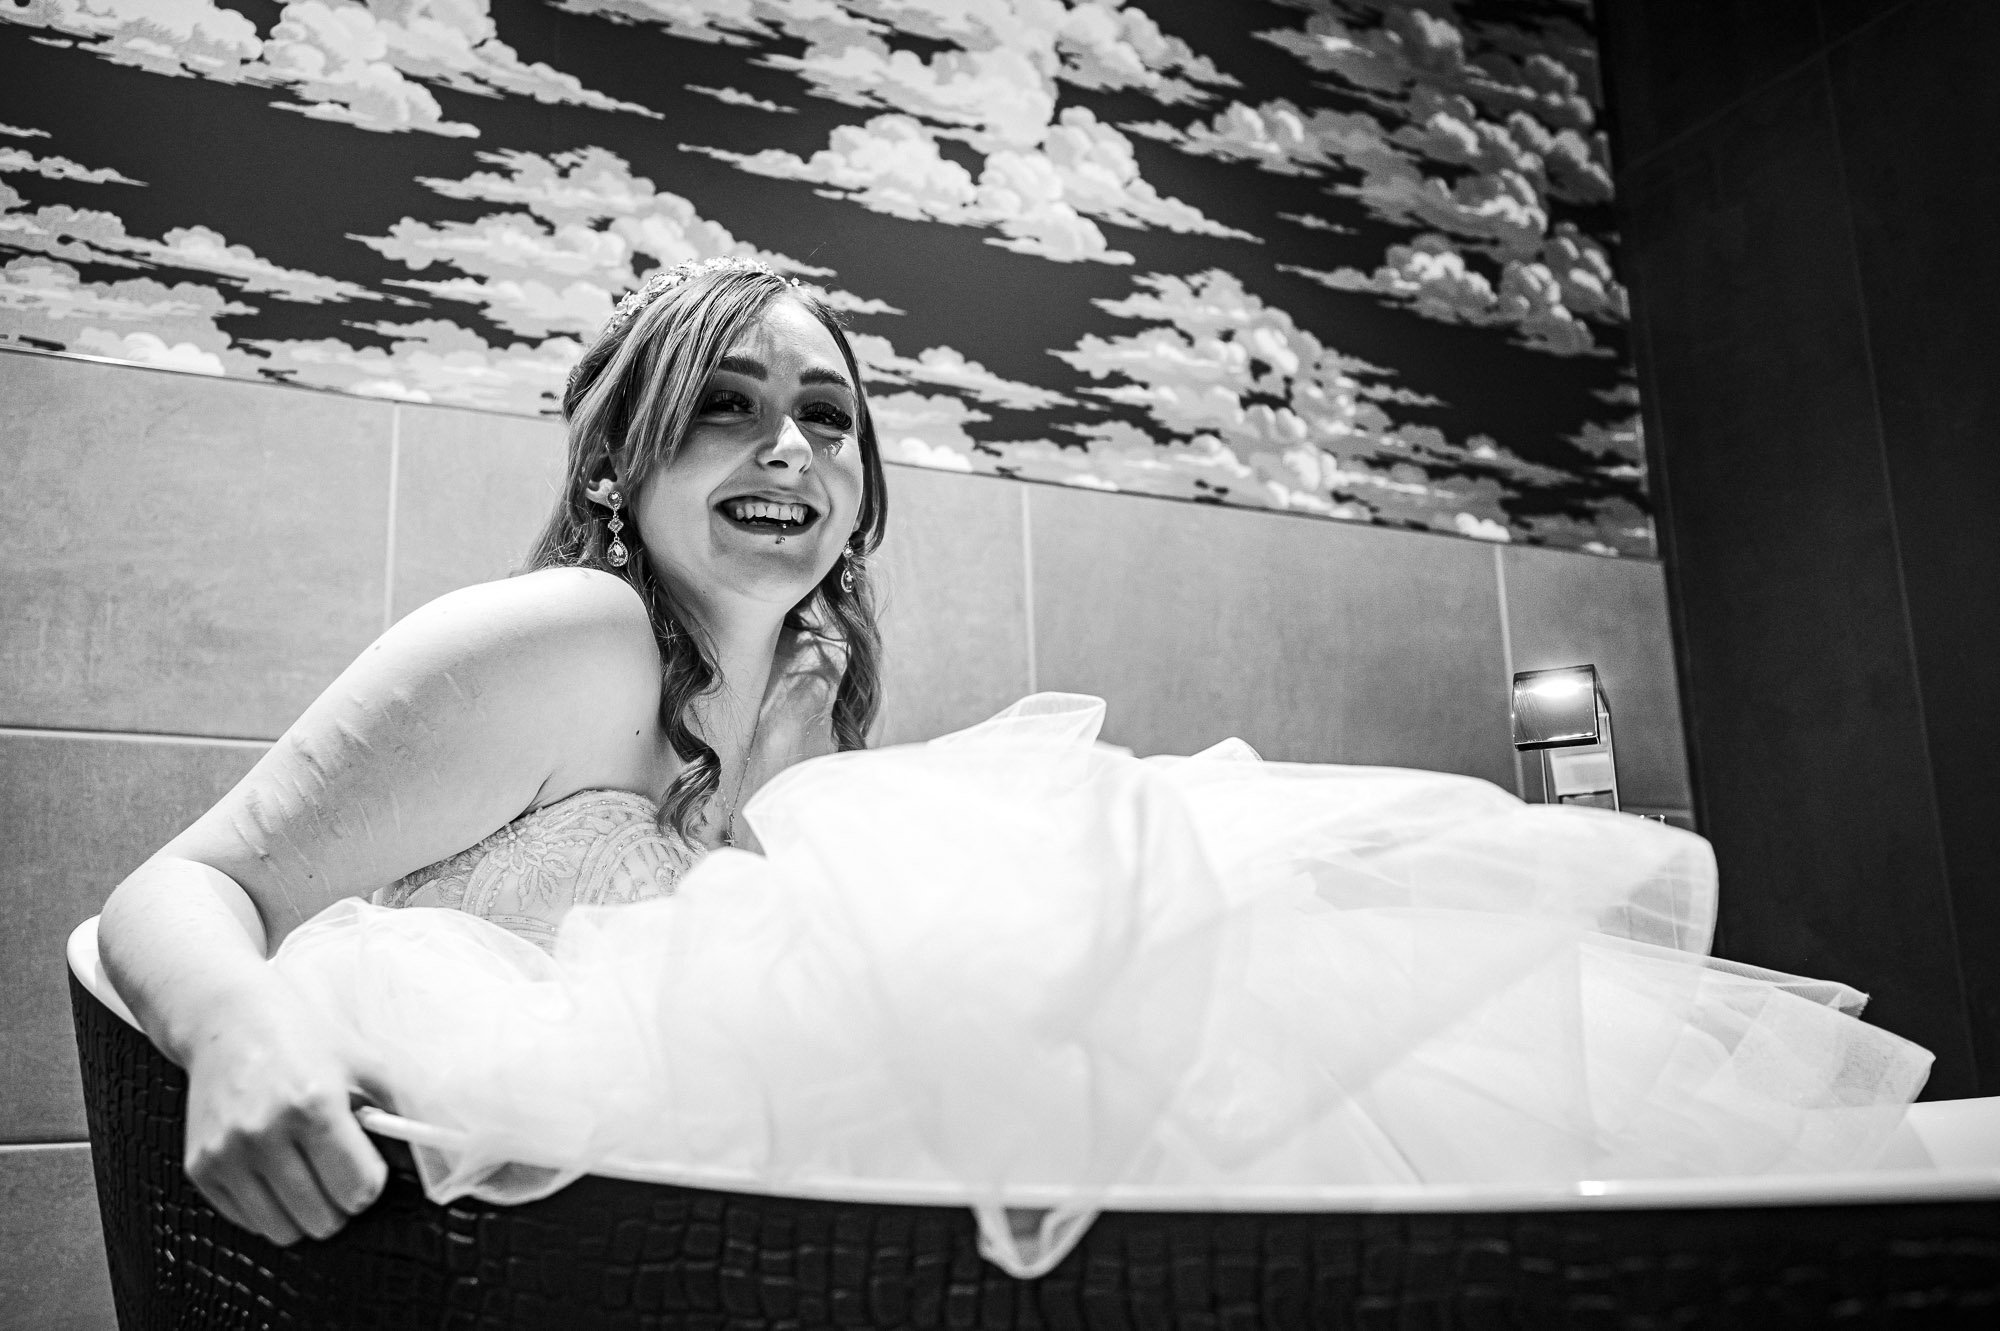 Bride, in the dress, in the bath tub!